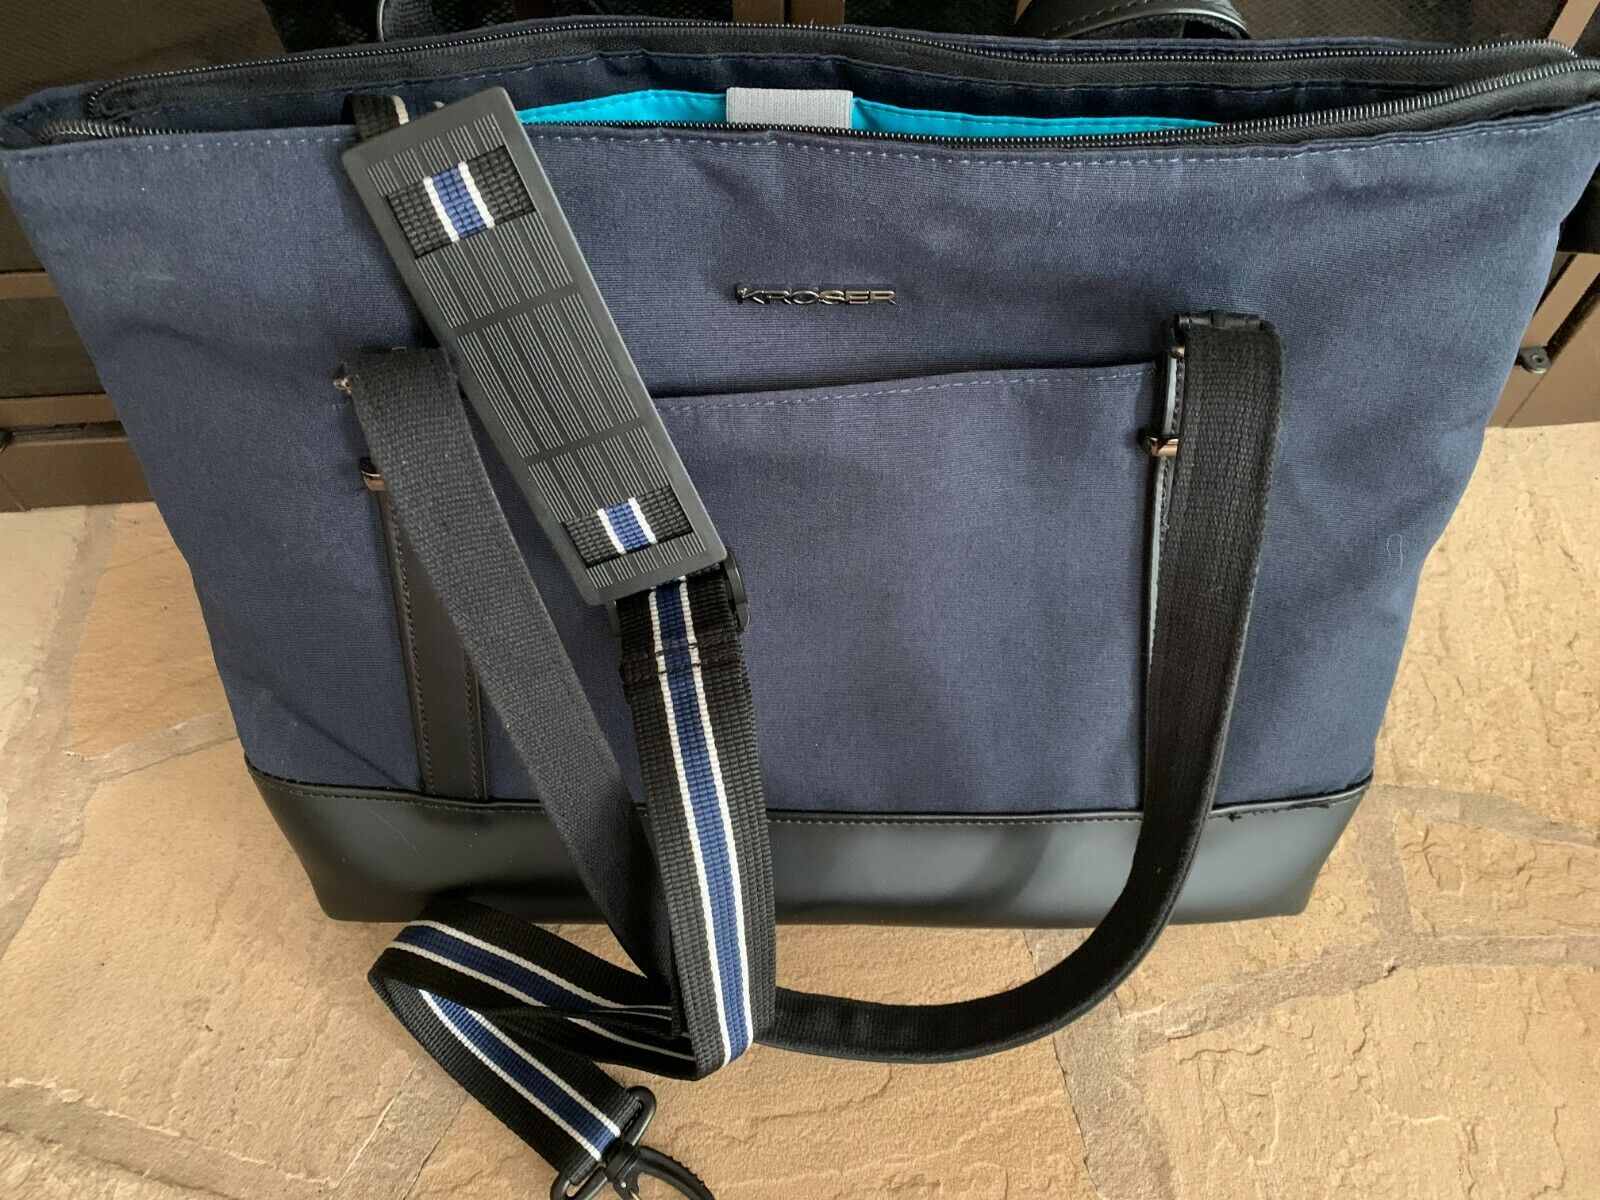 KROSER Laptop Tote Bag, Blue.  New item.